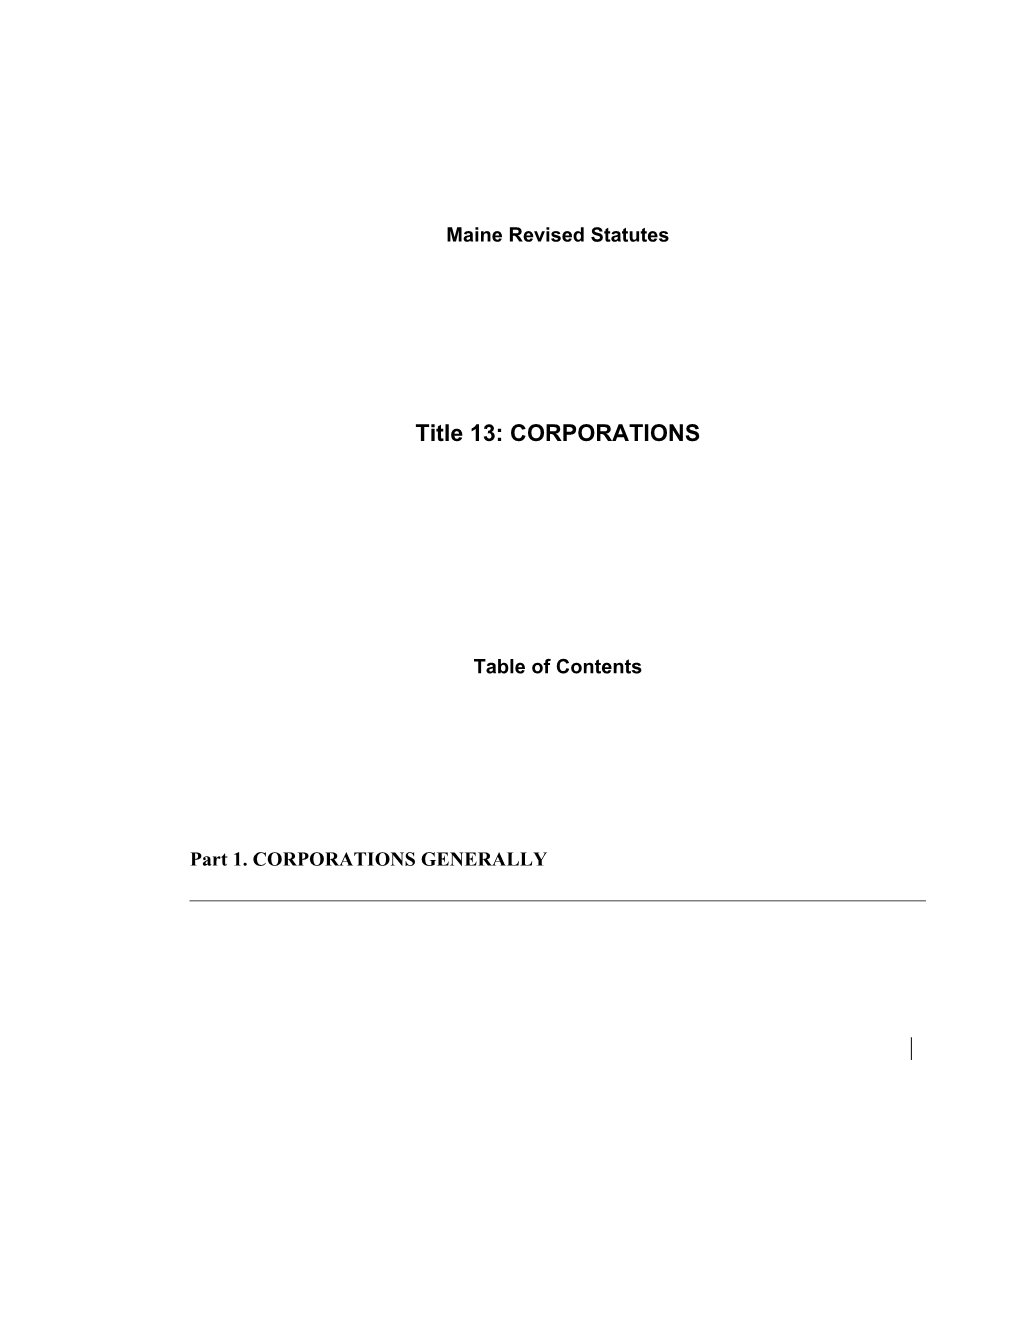 MRS Title 13: CORPORATIONS